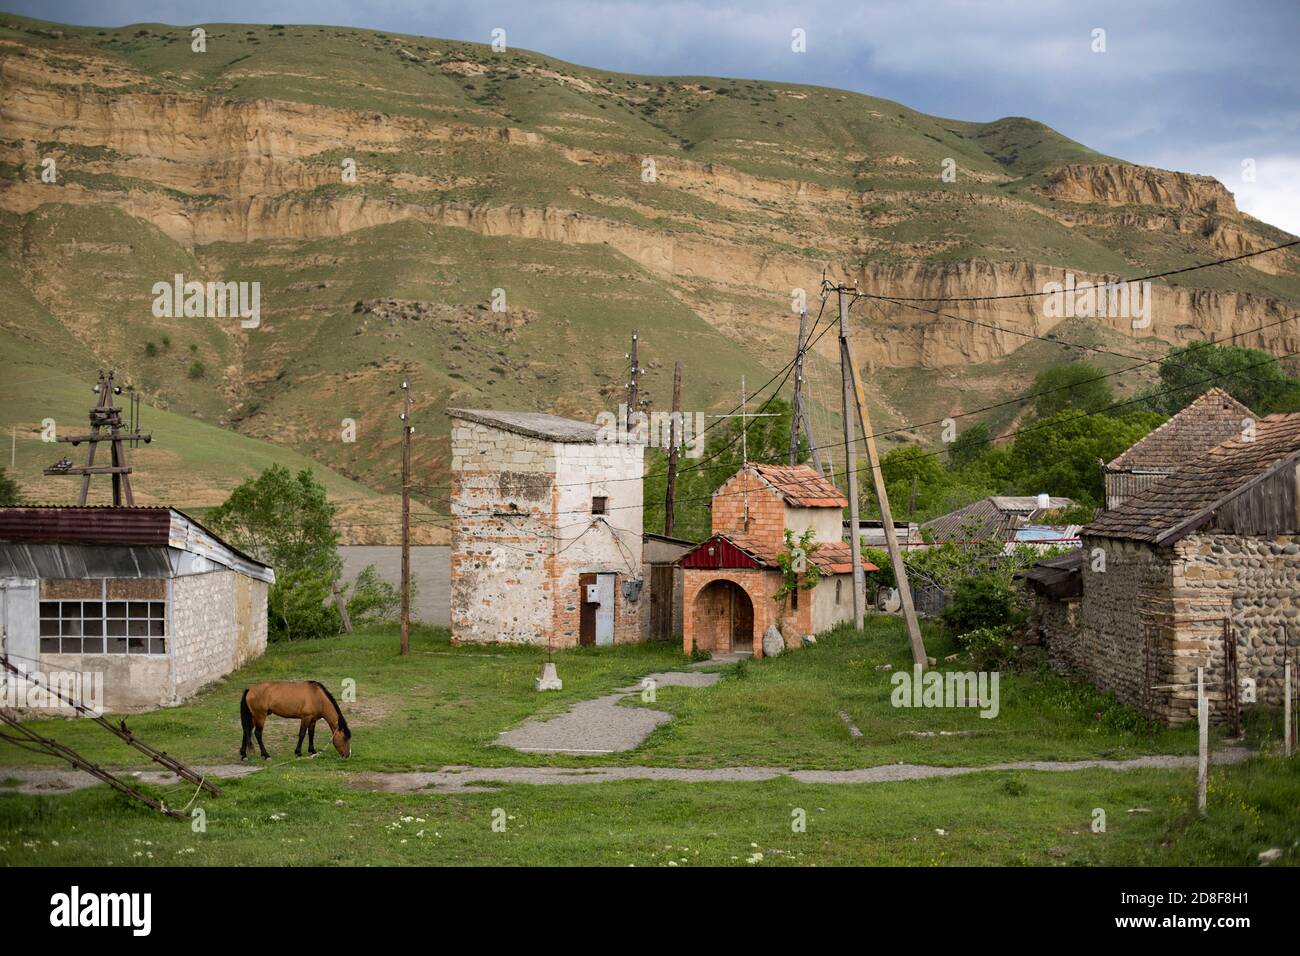 Rural village in Kvakhvreli (near Uplistsikhe), Georgia, Caucasus, Europe. Stock Photo